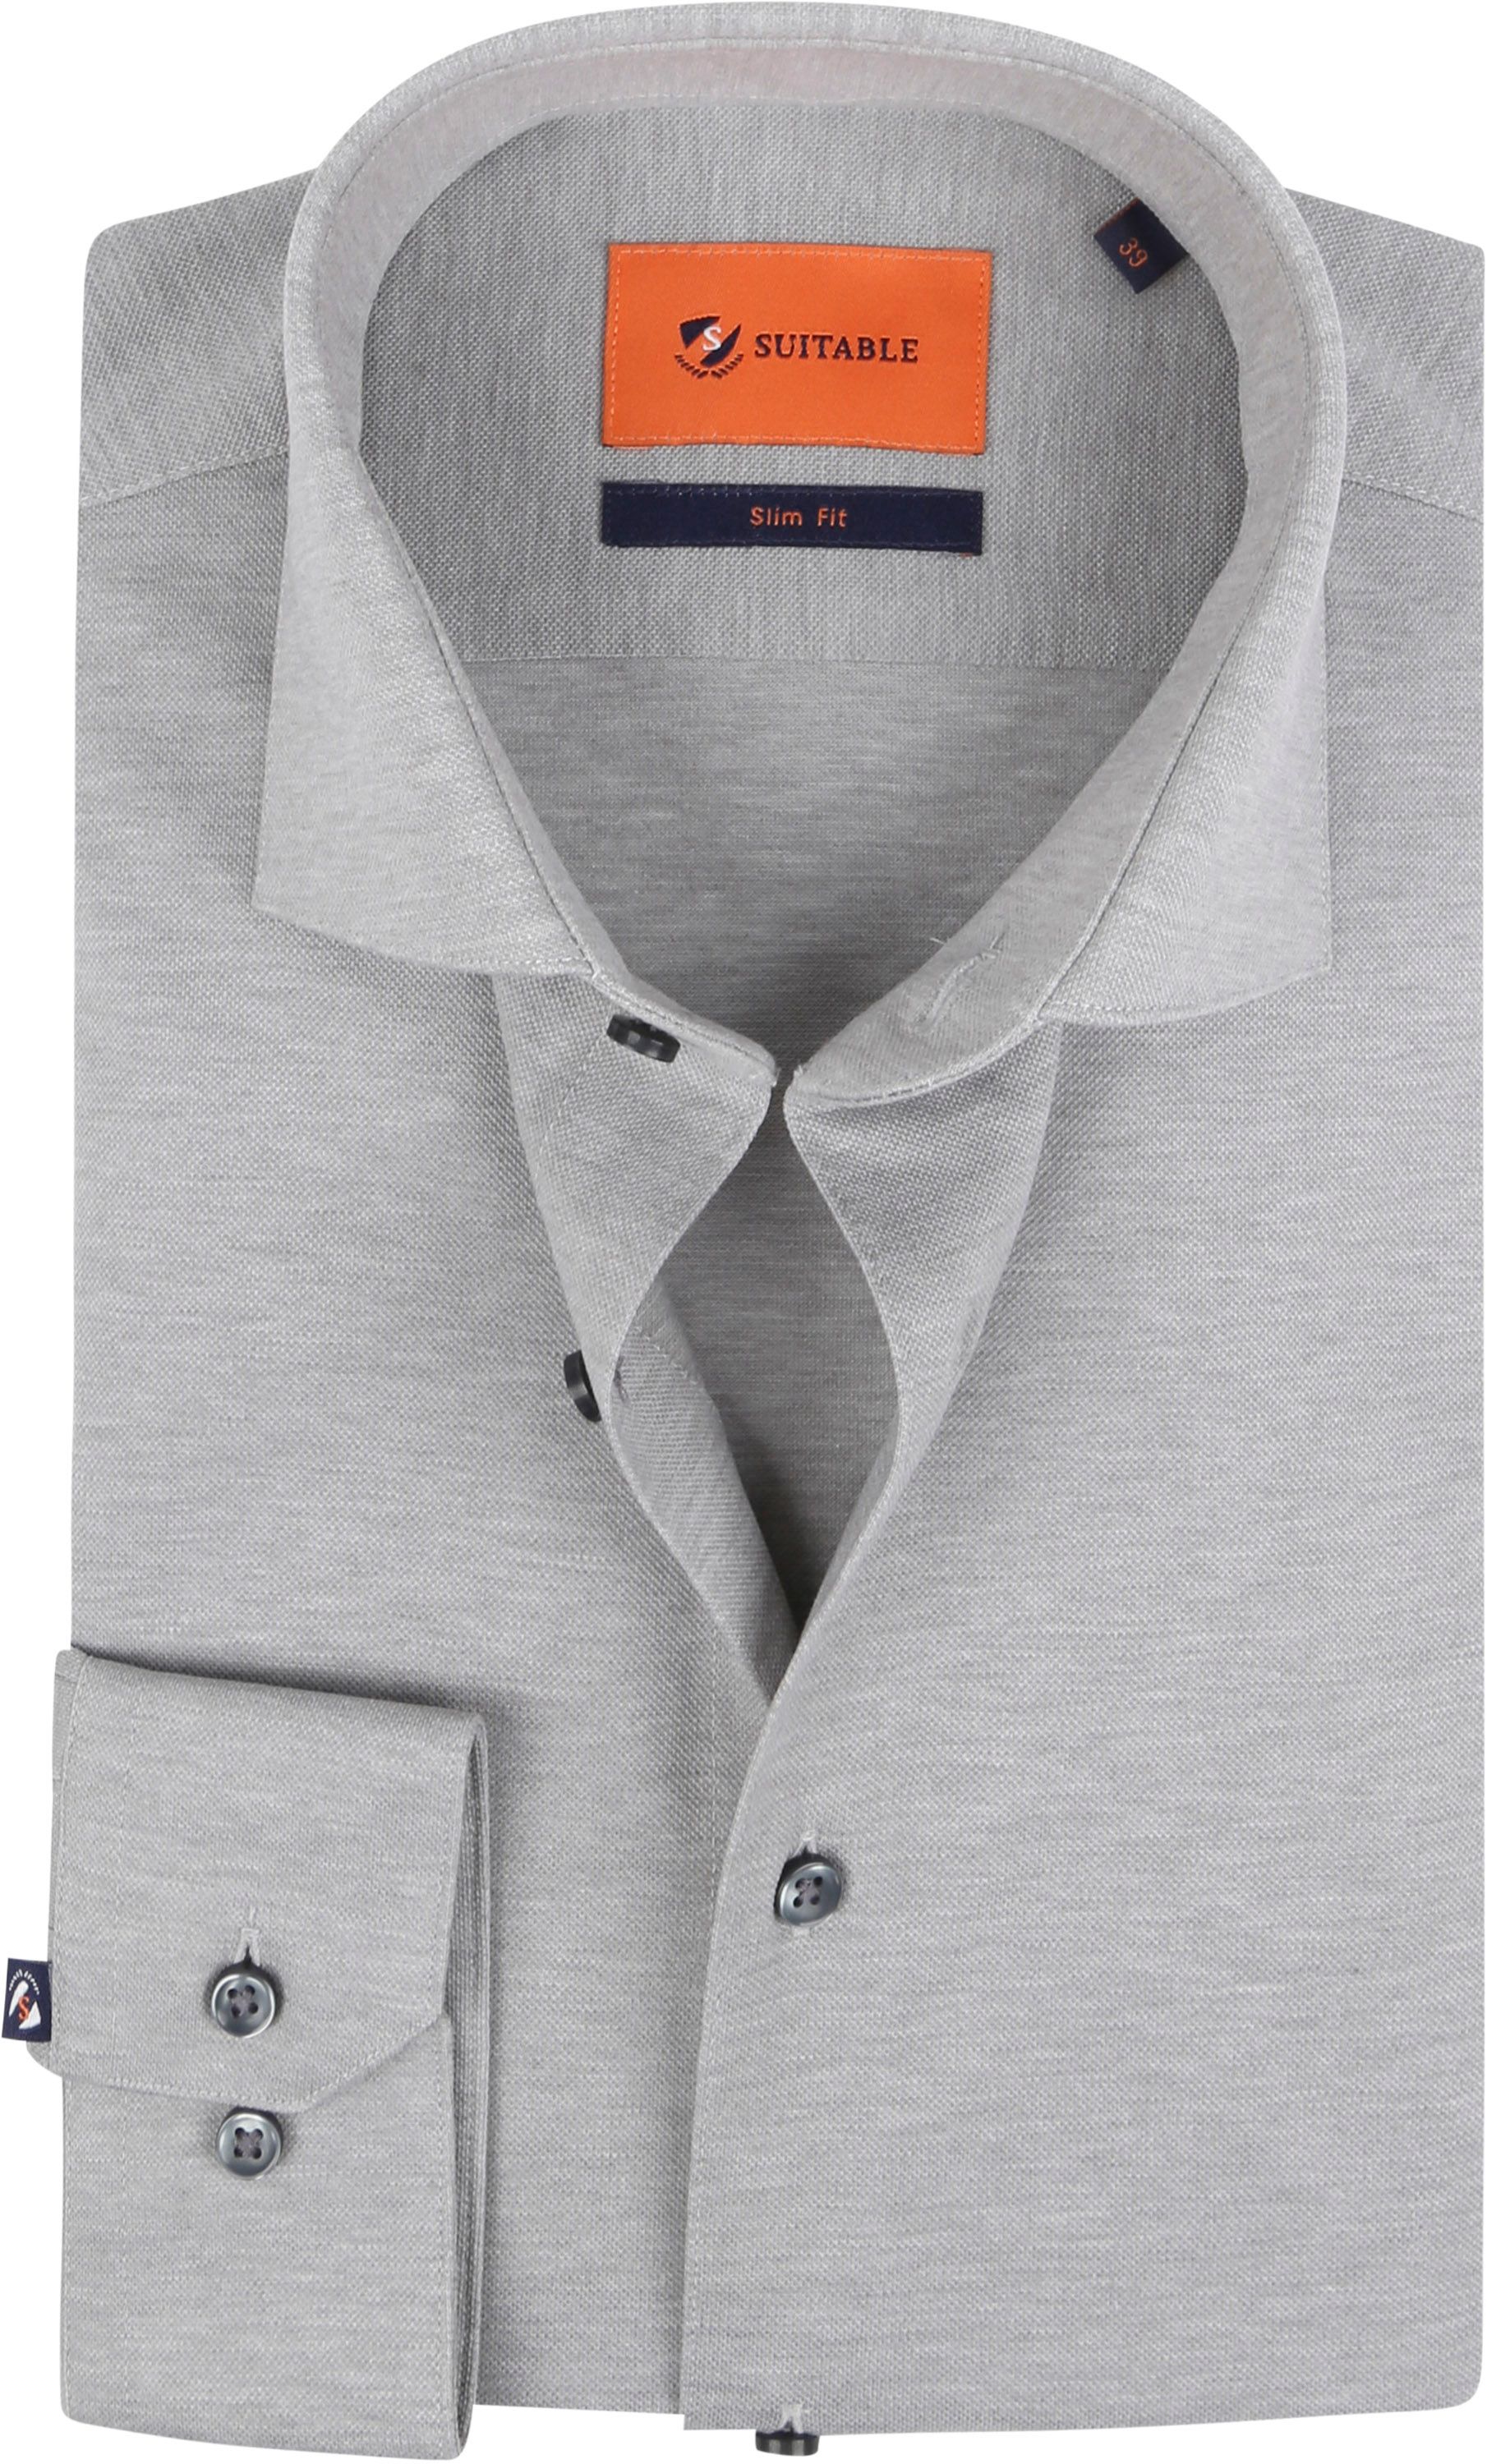 Suitable Shirt Pique Gray Grey size 15